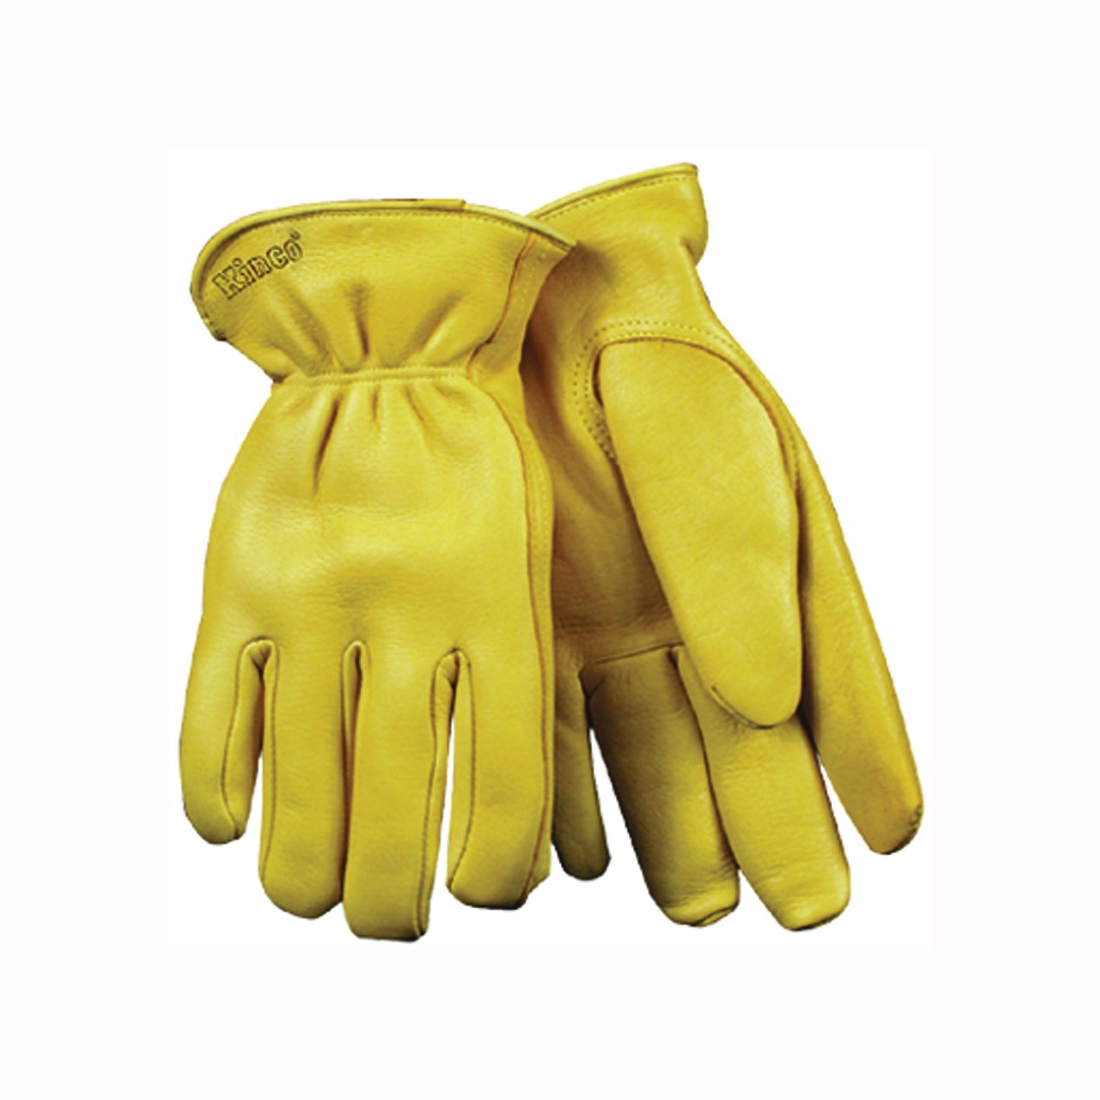 90HK-L Driver Gloves, Men's, L, 10 in L, Keystone Thumb, Easy-On Cuff, Deerskin Leather, Yellow